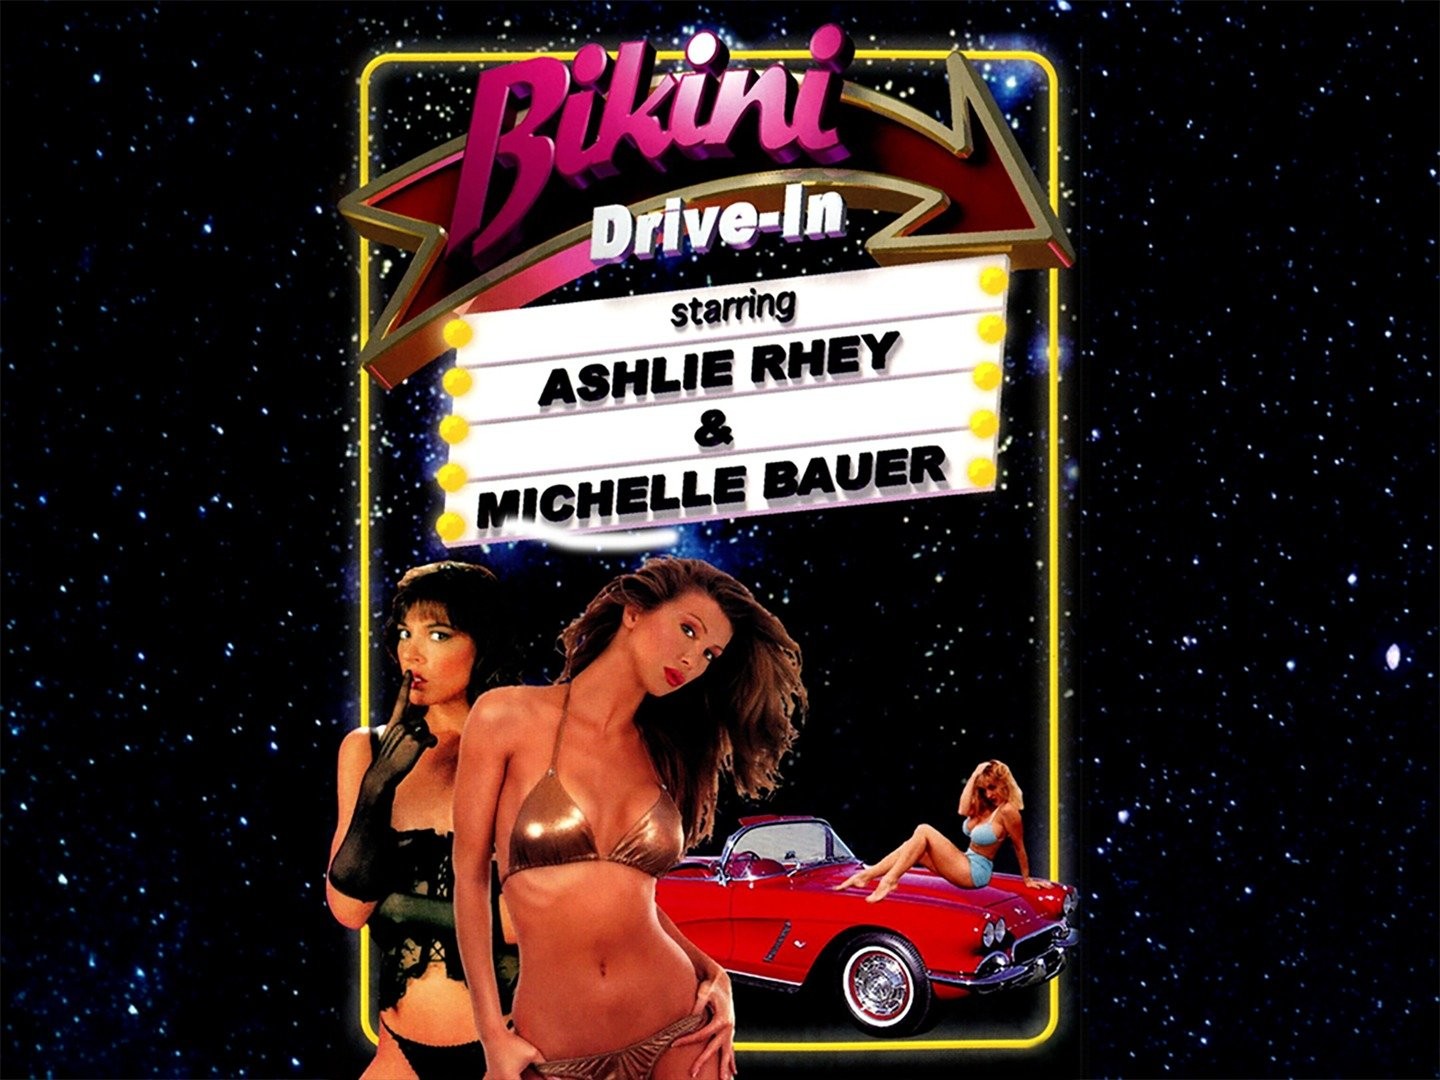 Bikini drive in movie